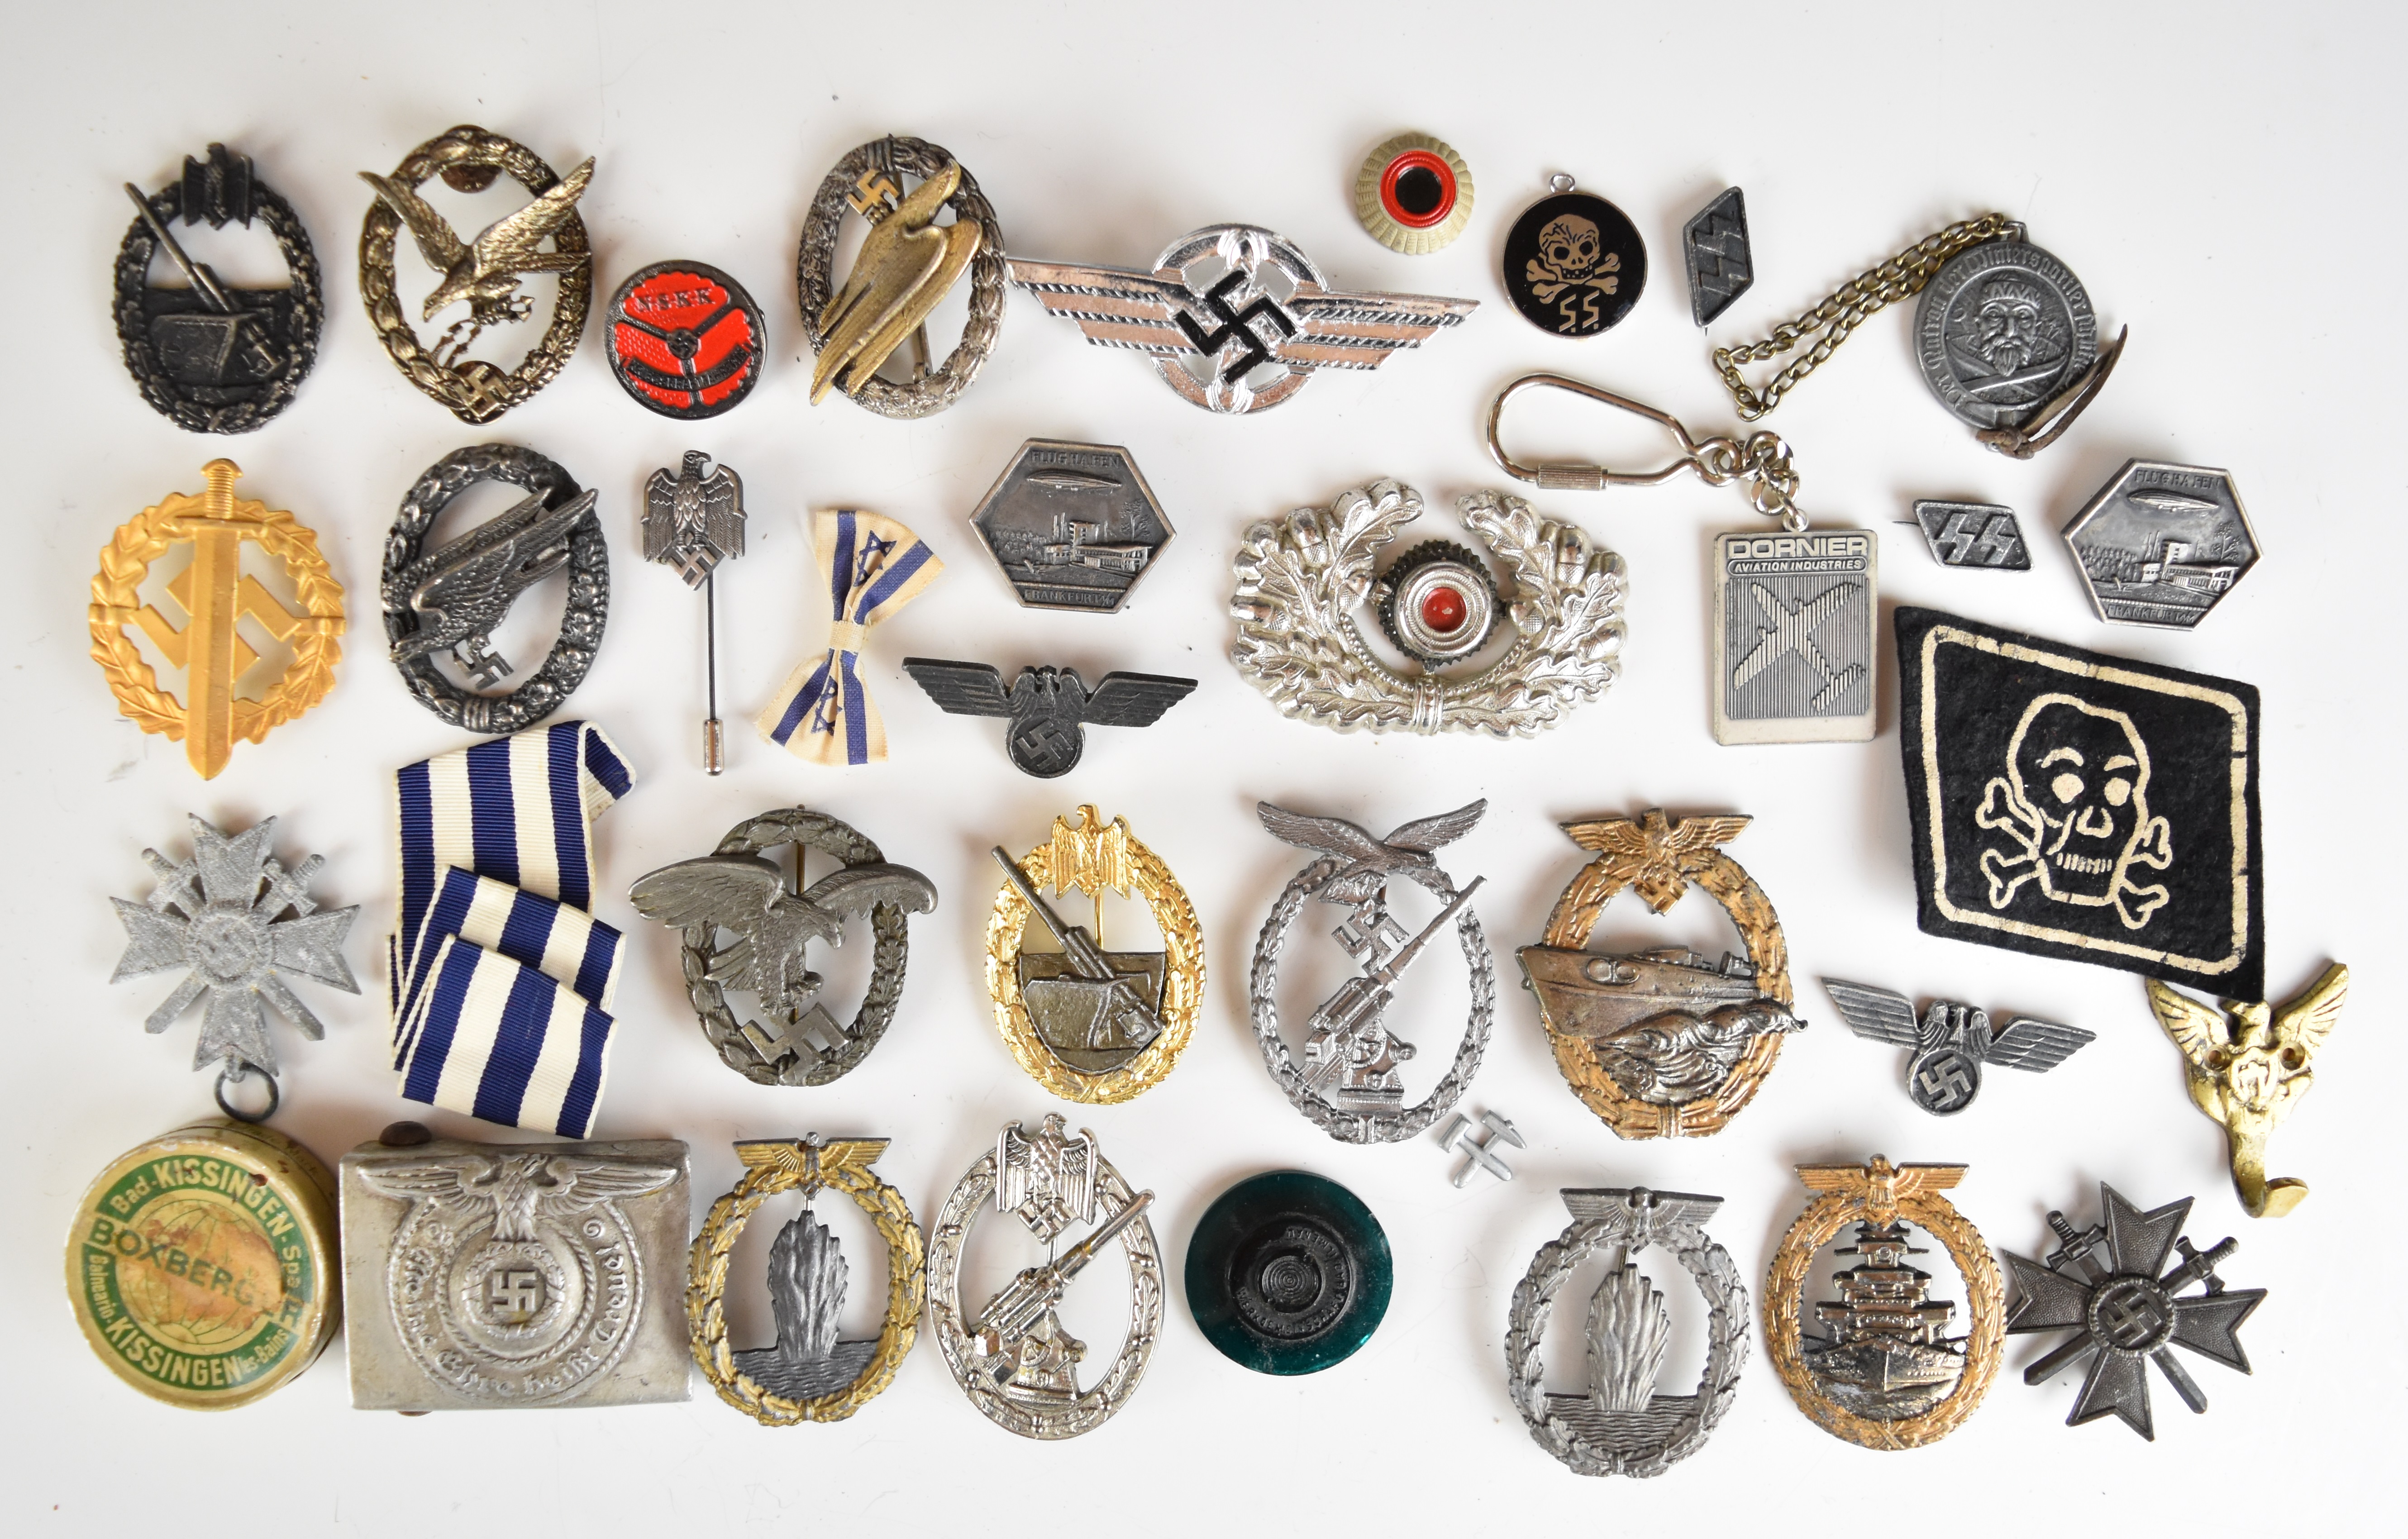 Replica German WW2 Nazi Third Reich badges, insignia and medals including High Seas Fleet, Artillery - Image 9 of 16